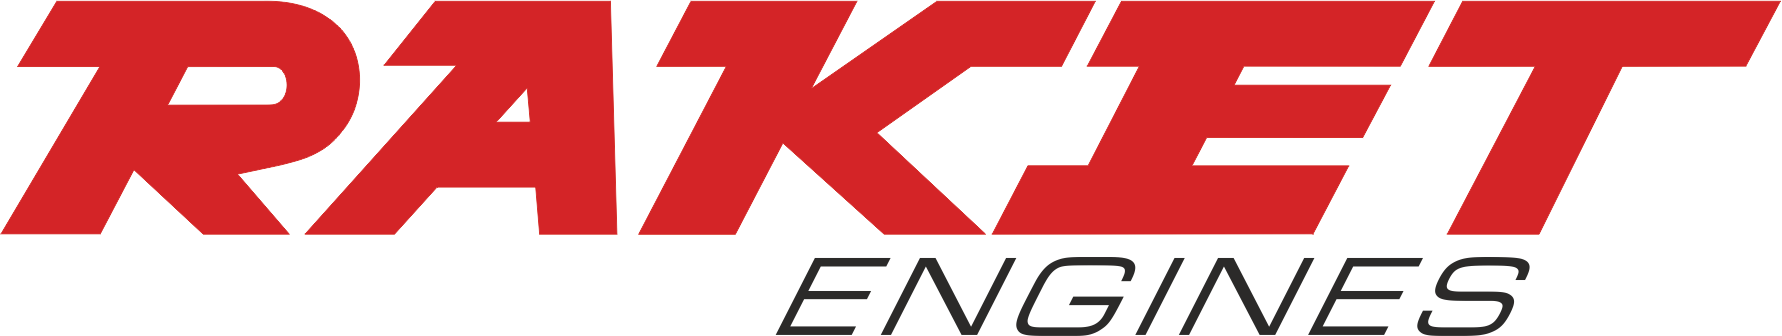 Raket Engines logo for download in vector format